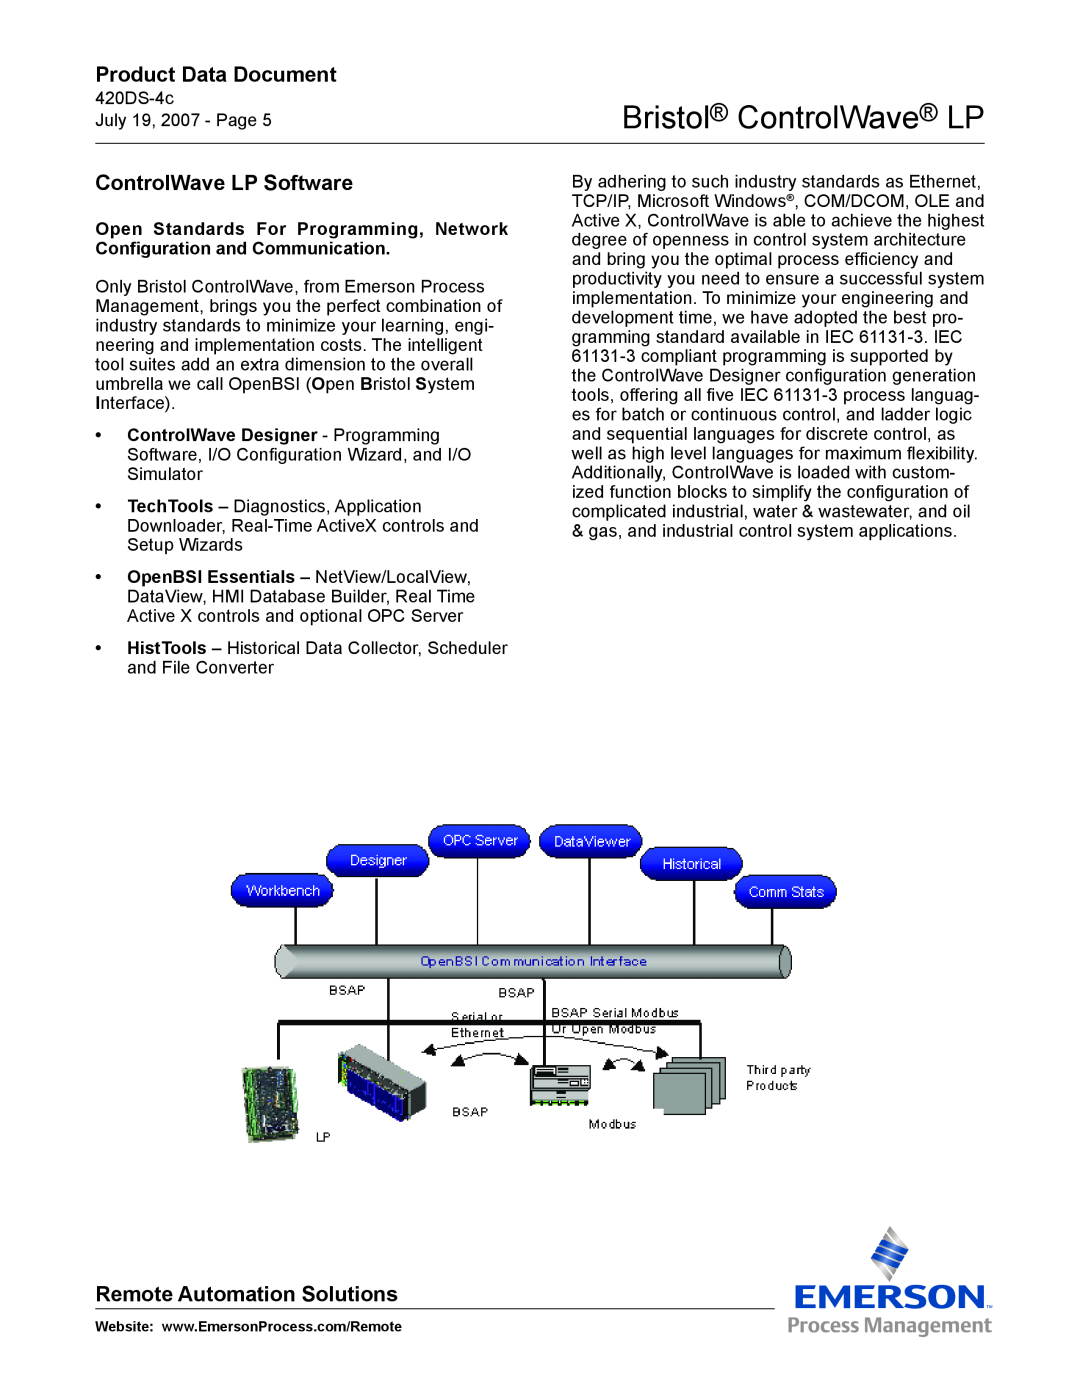 Emerson Process Management ControlWave LP Software, Open Standards For Programming, Network, Bristol ControlWave LP 